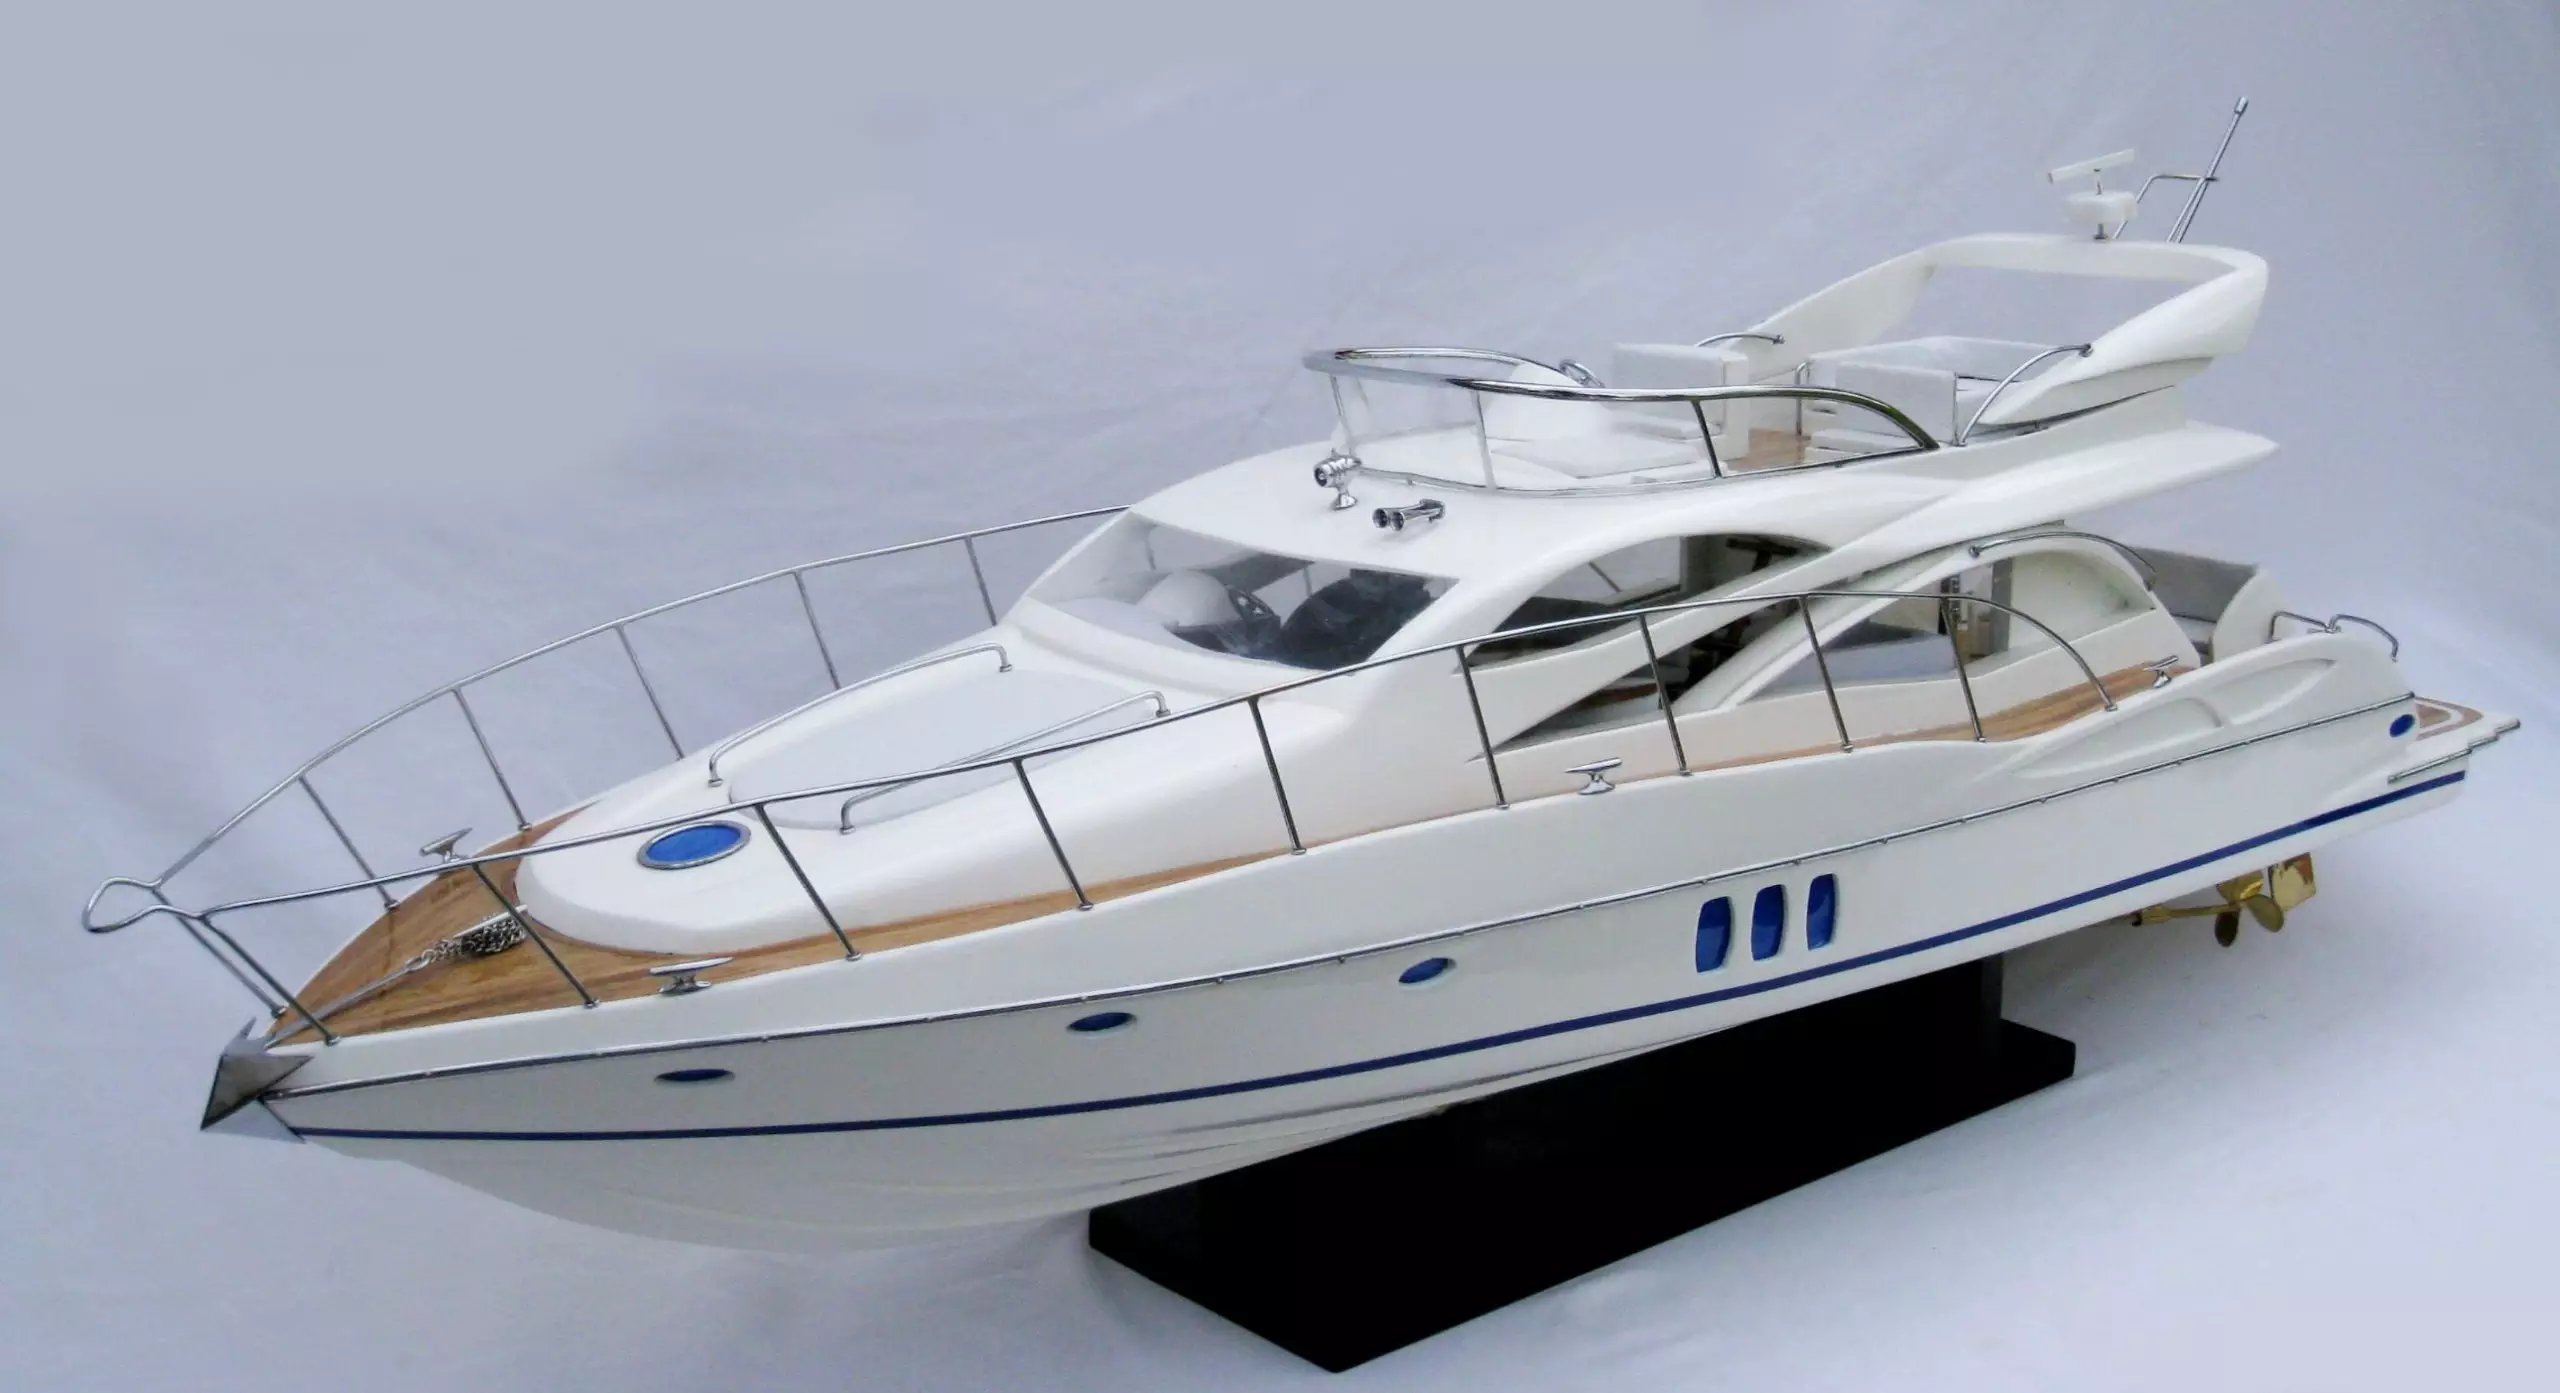 Sunseeker 60 Model Ship - GN